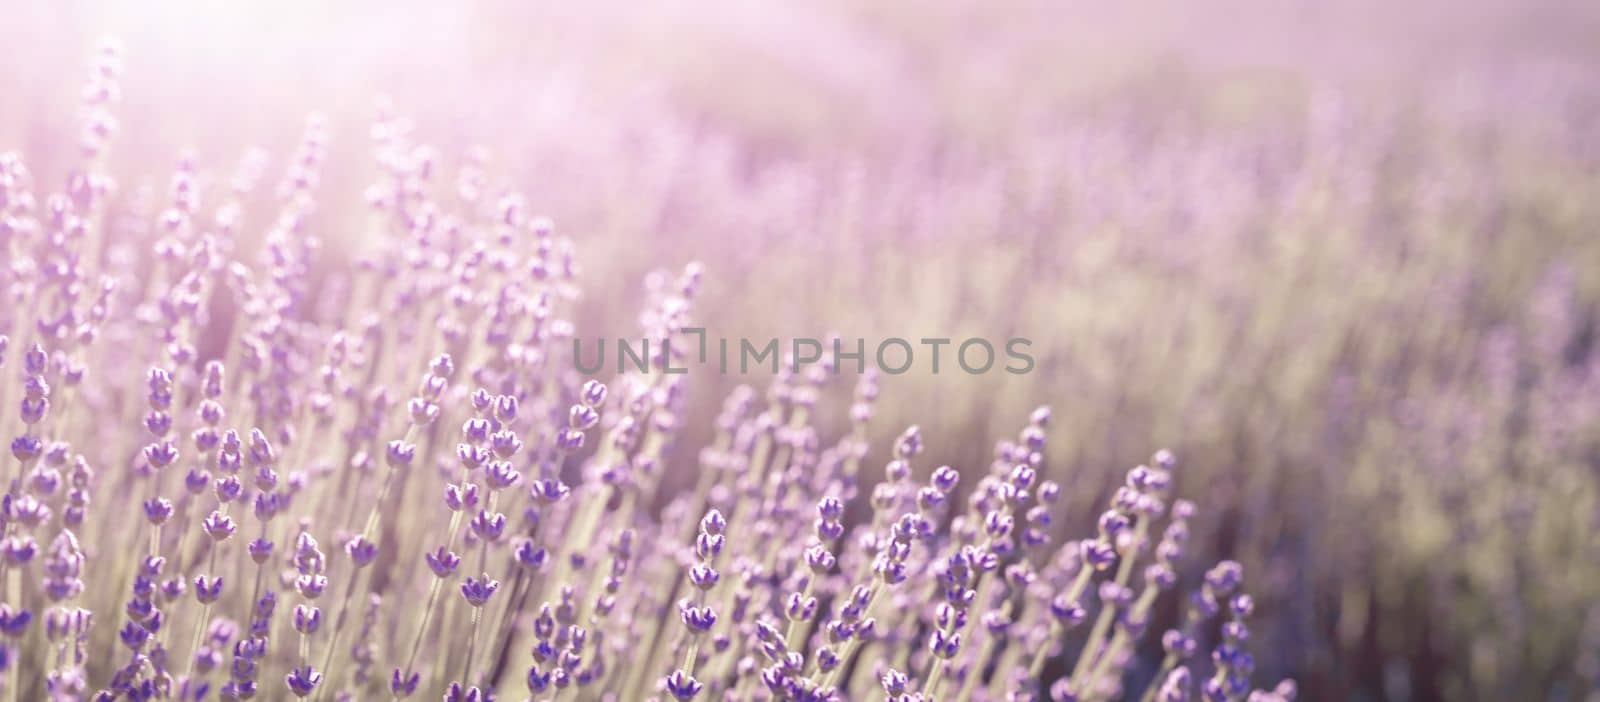 Lavender field banner. With soft light effect for floral background on horizontal web header or banner